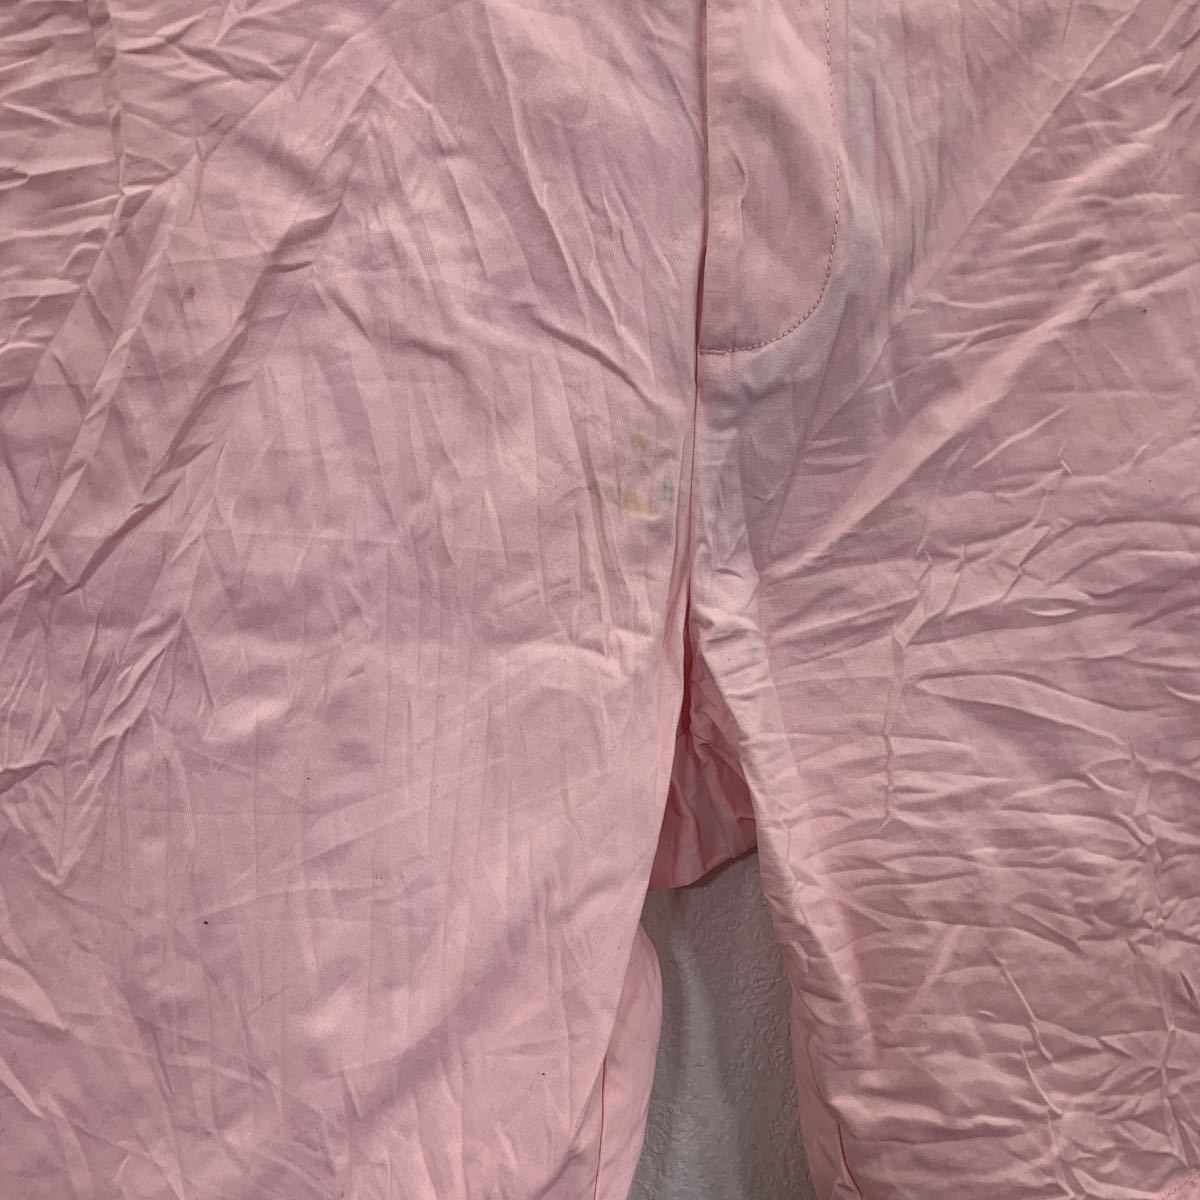 TOMMY HILFIGER ... шорты   W36 ...  розовый   бу одежда ...  Америка ... 2307-165